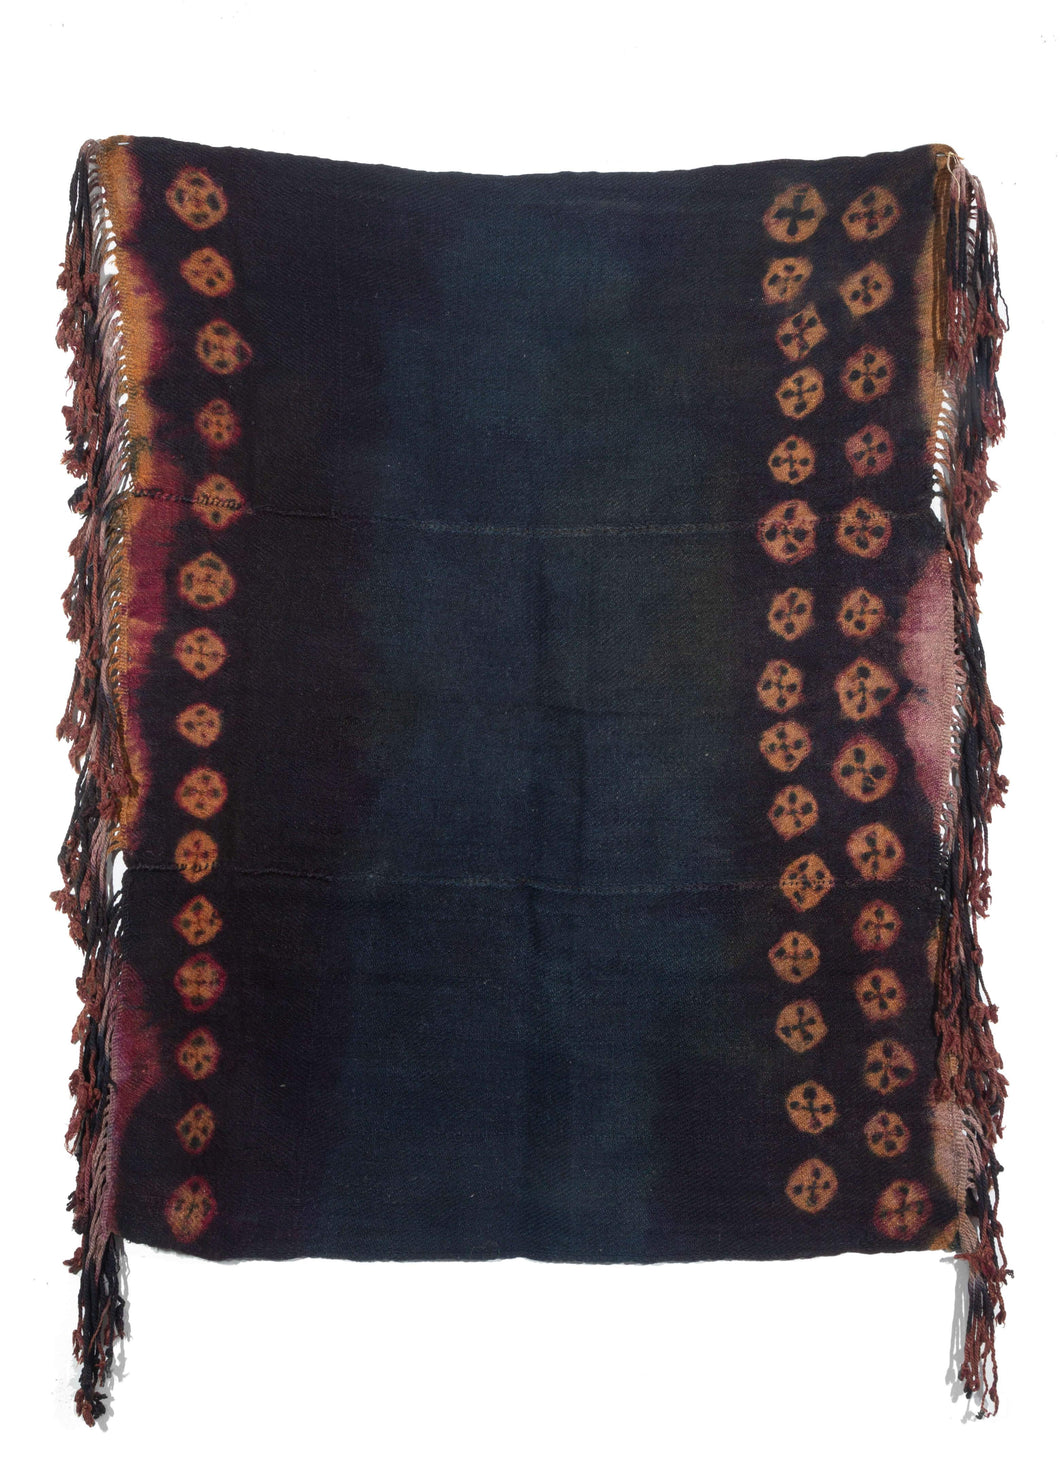 Bokh Shawl from Zanskar Tribal area of Lakaskh India, plain woven wool resist-dyed with indigo